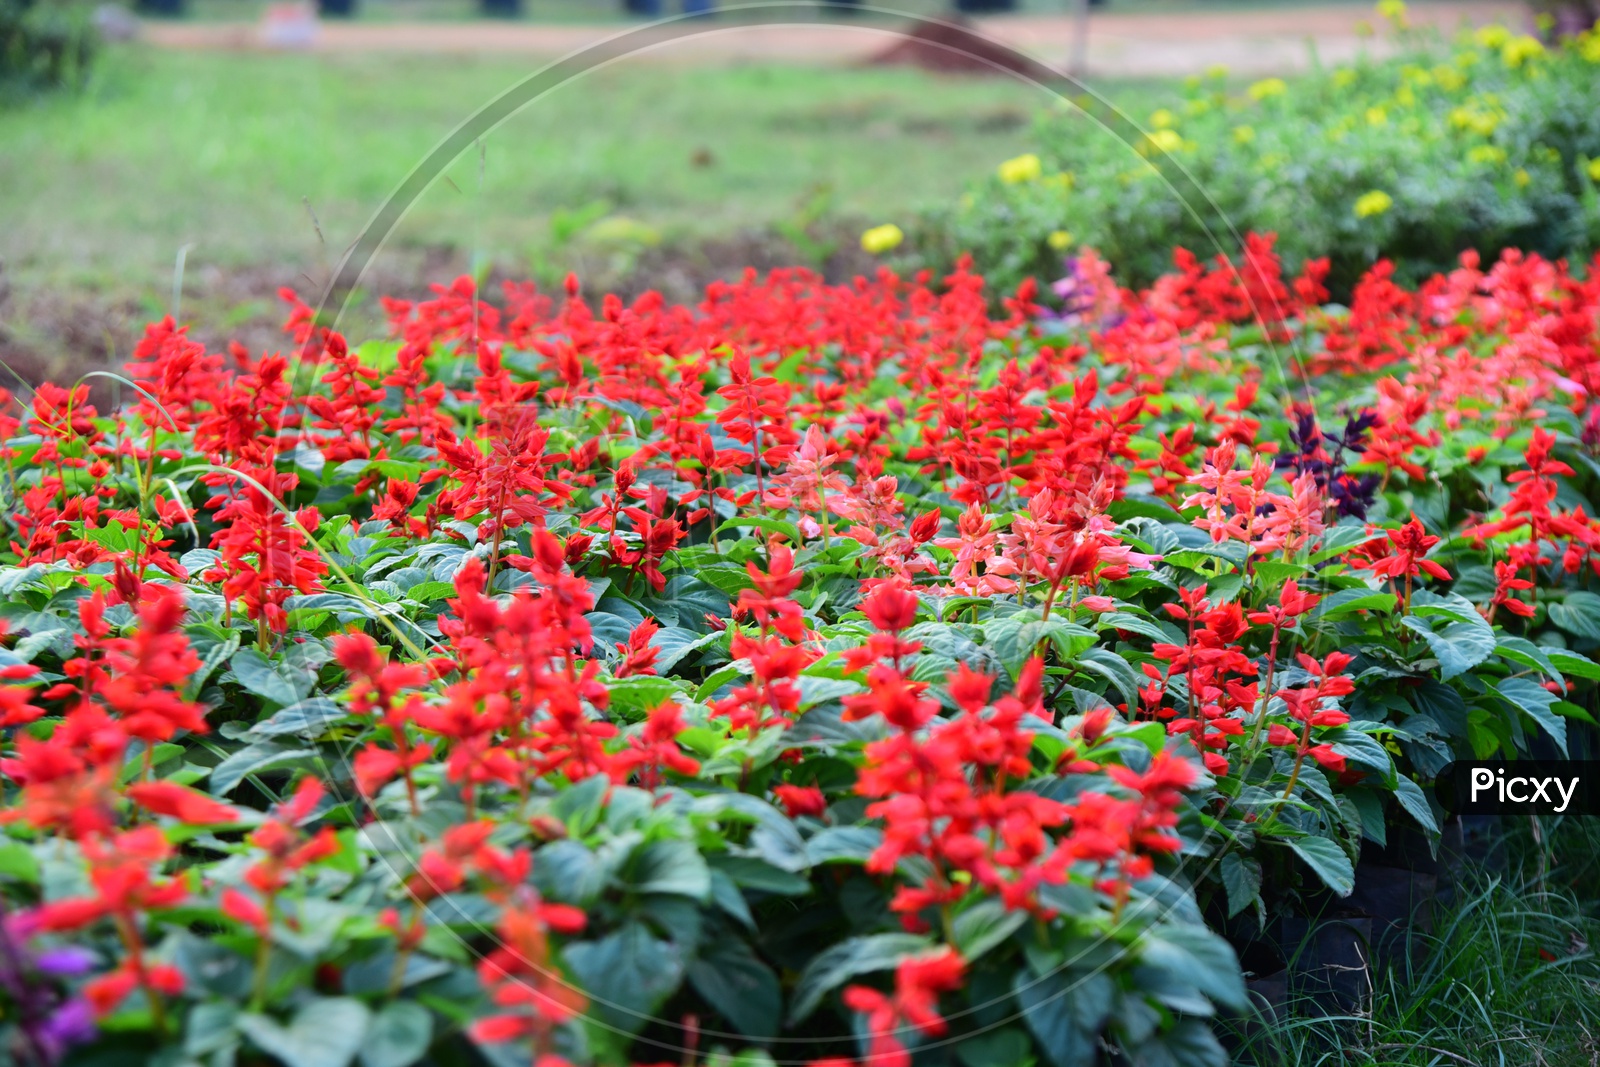 Red Salvia flowers